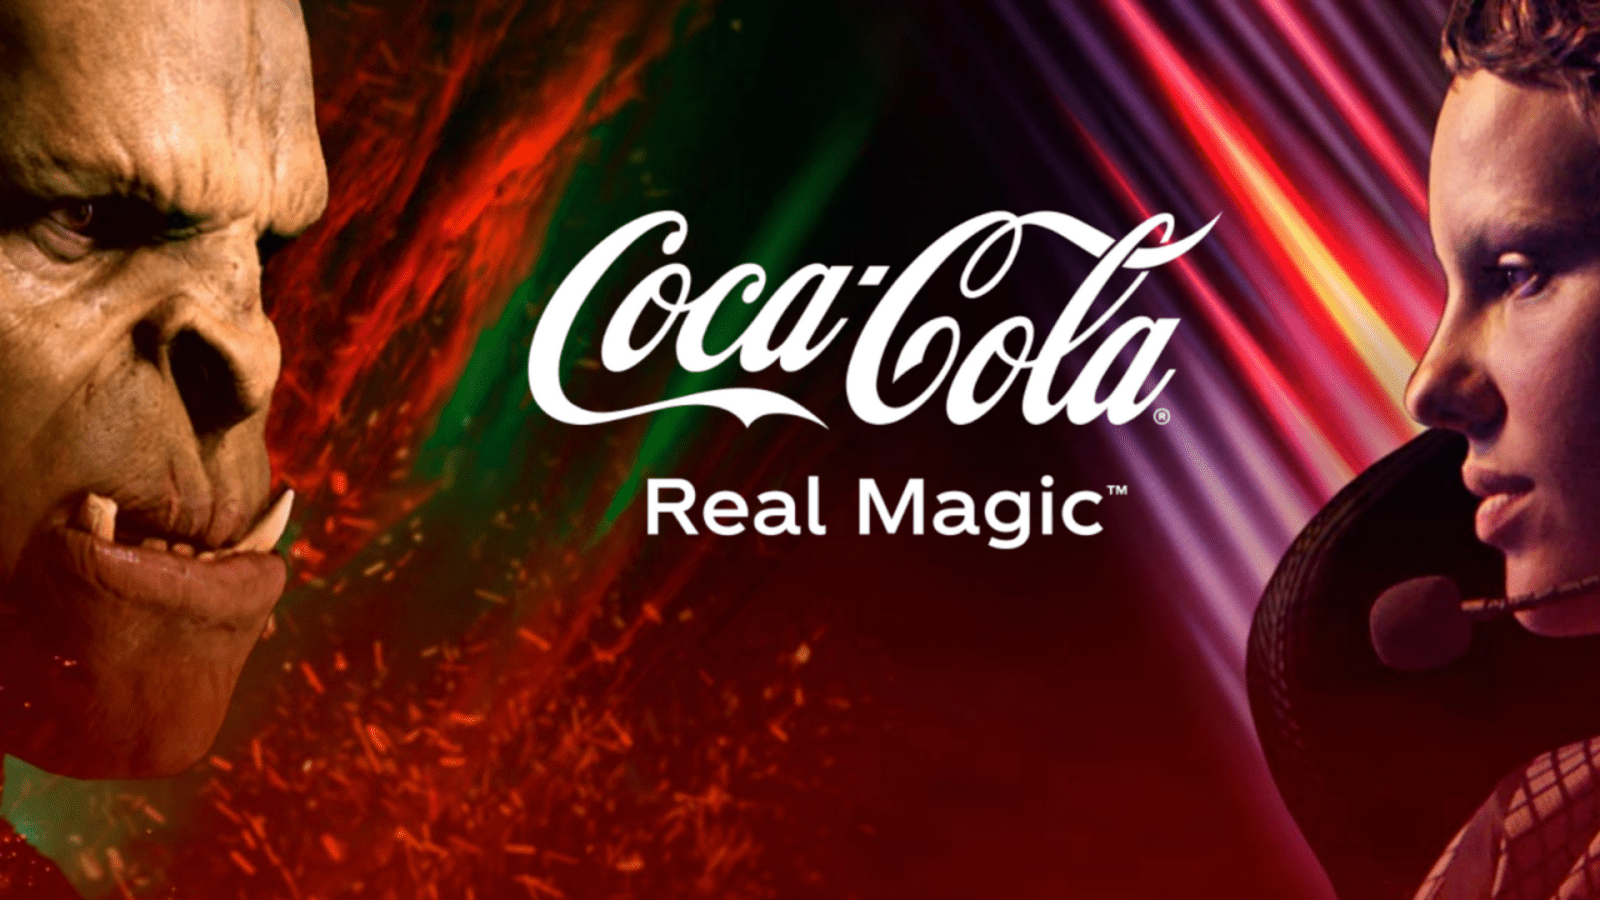 Coca-Cola lança campanha global ‘Real Magic’ com a Twitch